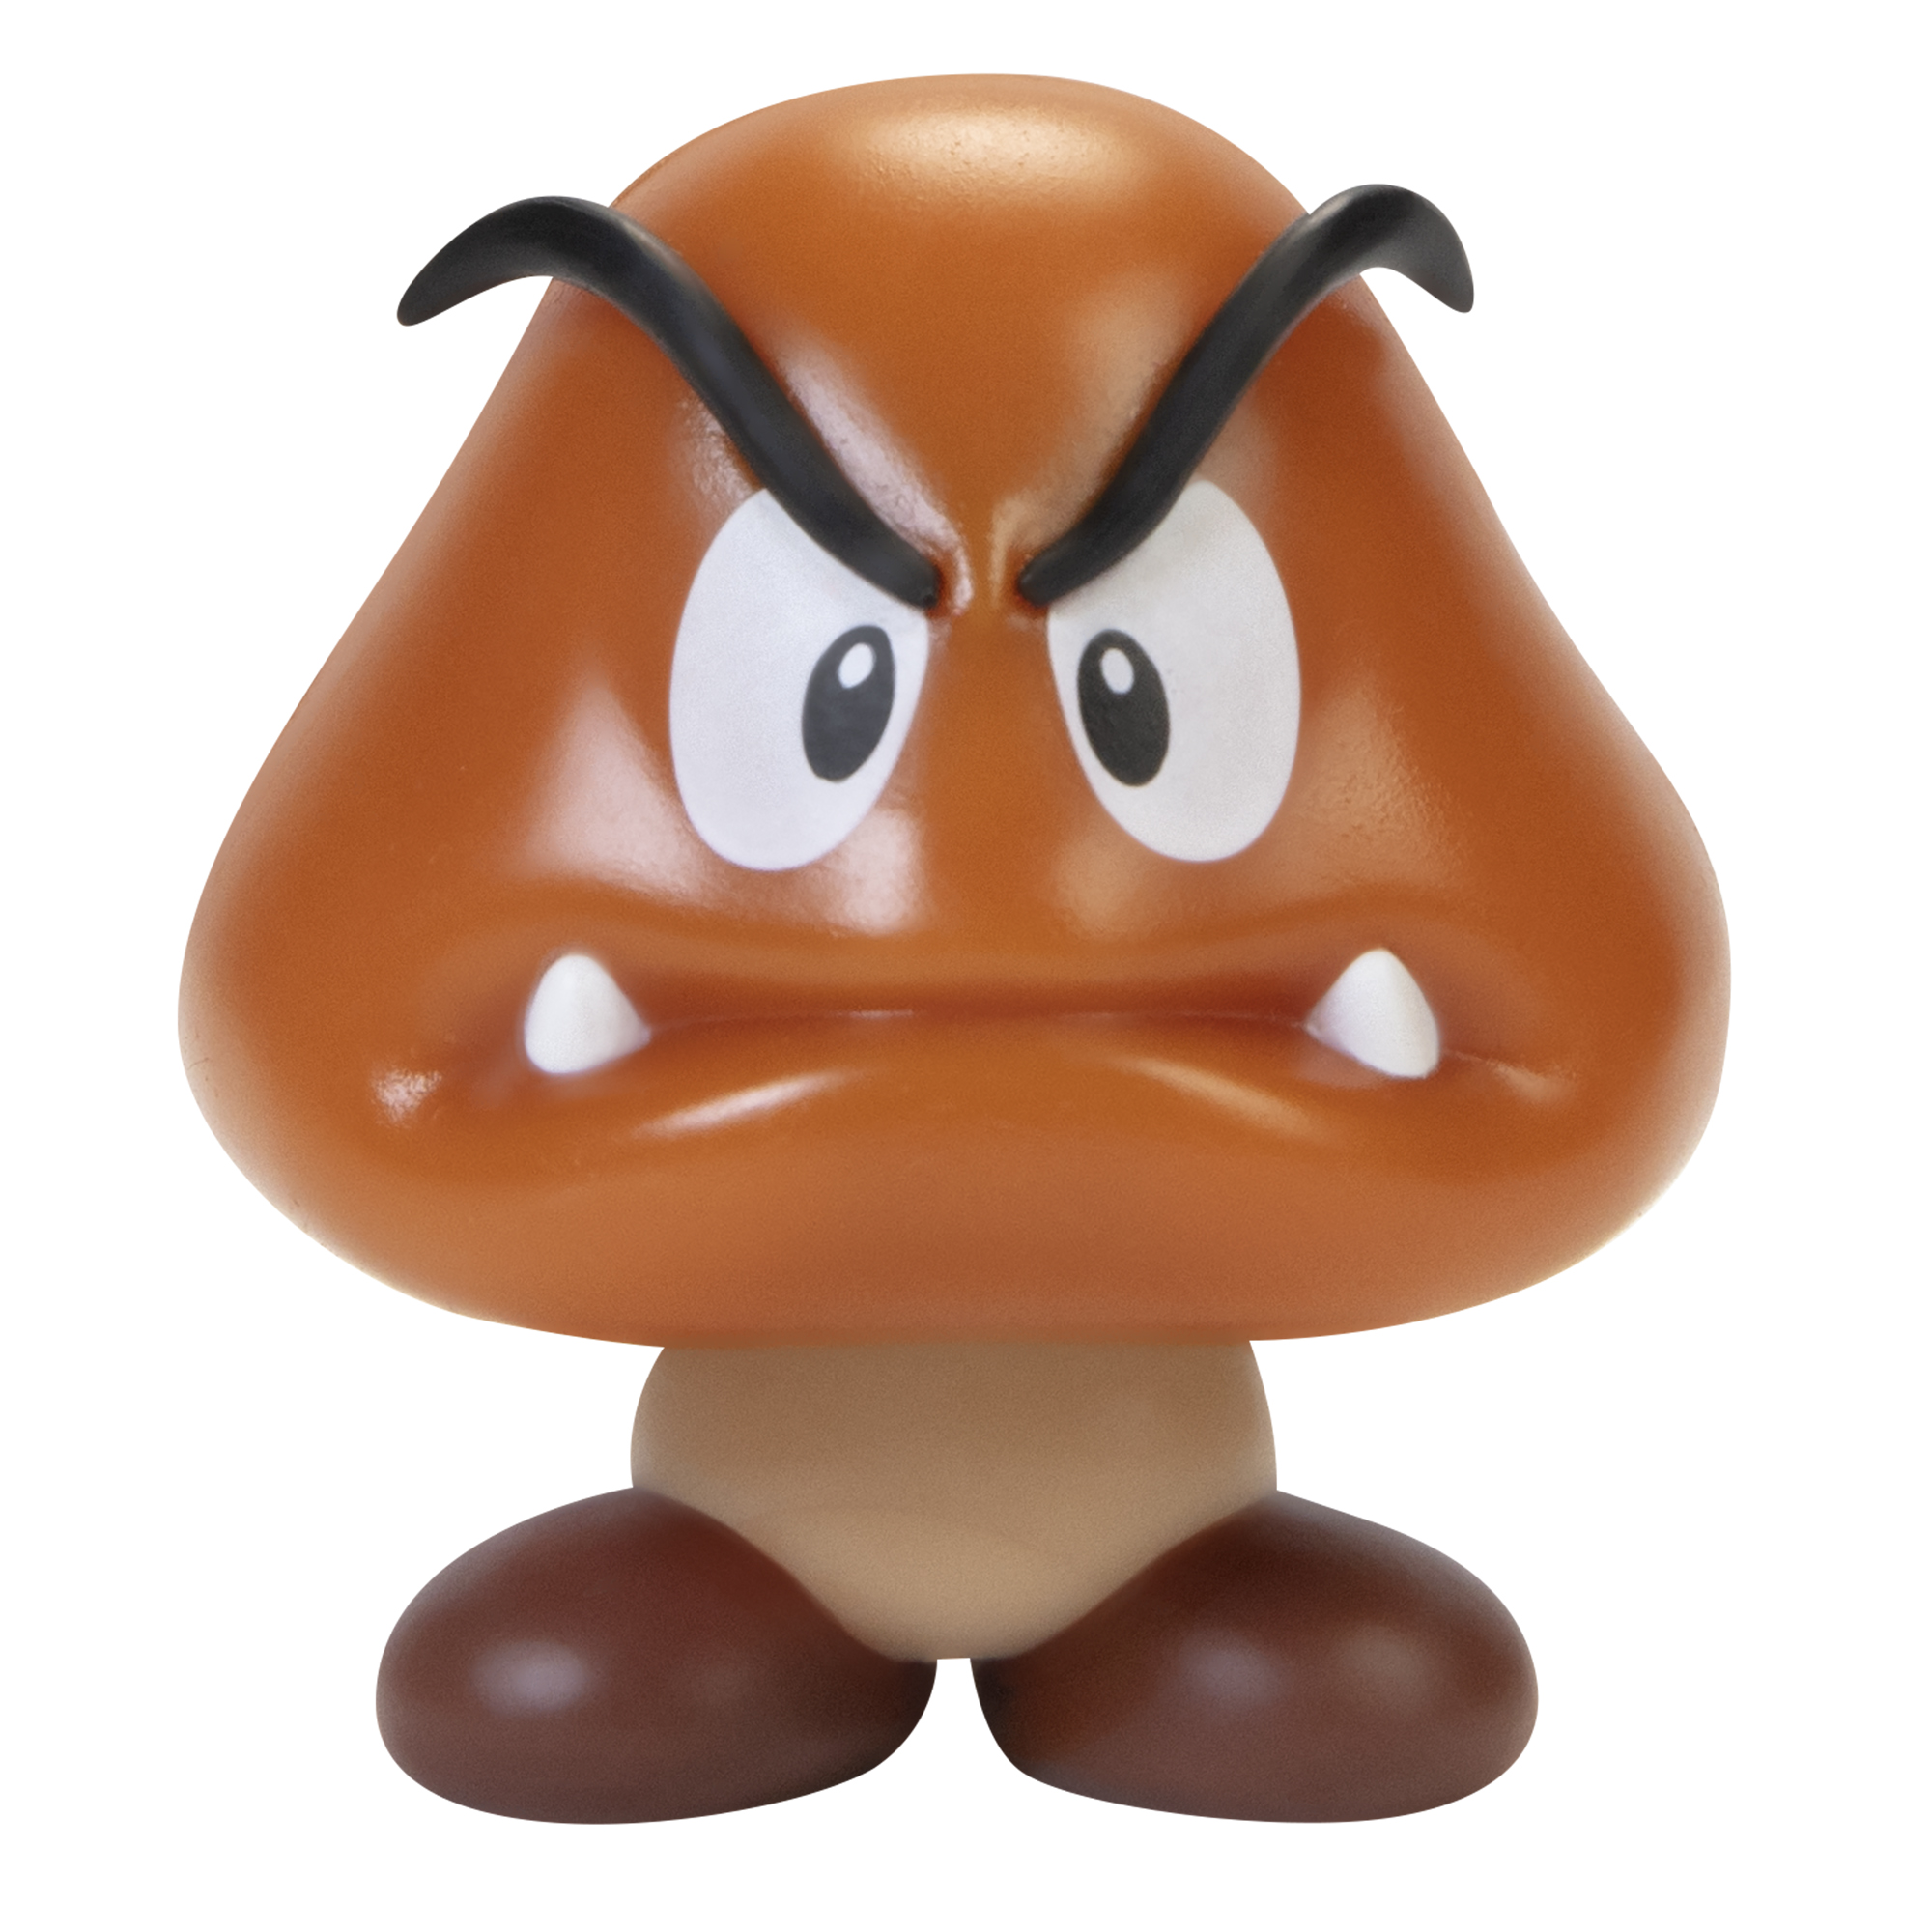 Super Mario Articulated Action Figure 2.5″ Goomba